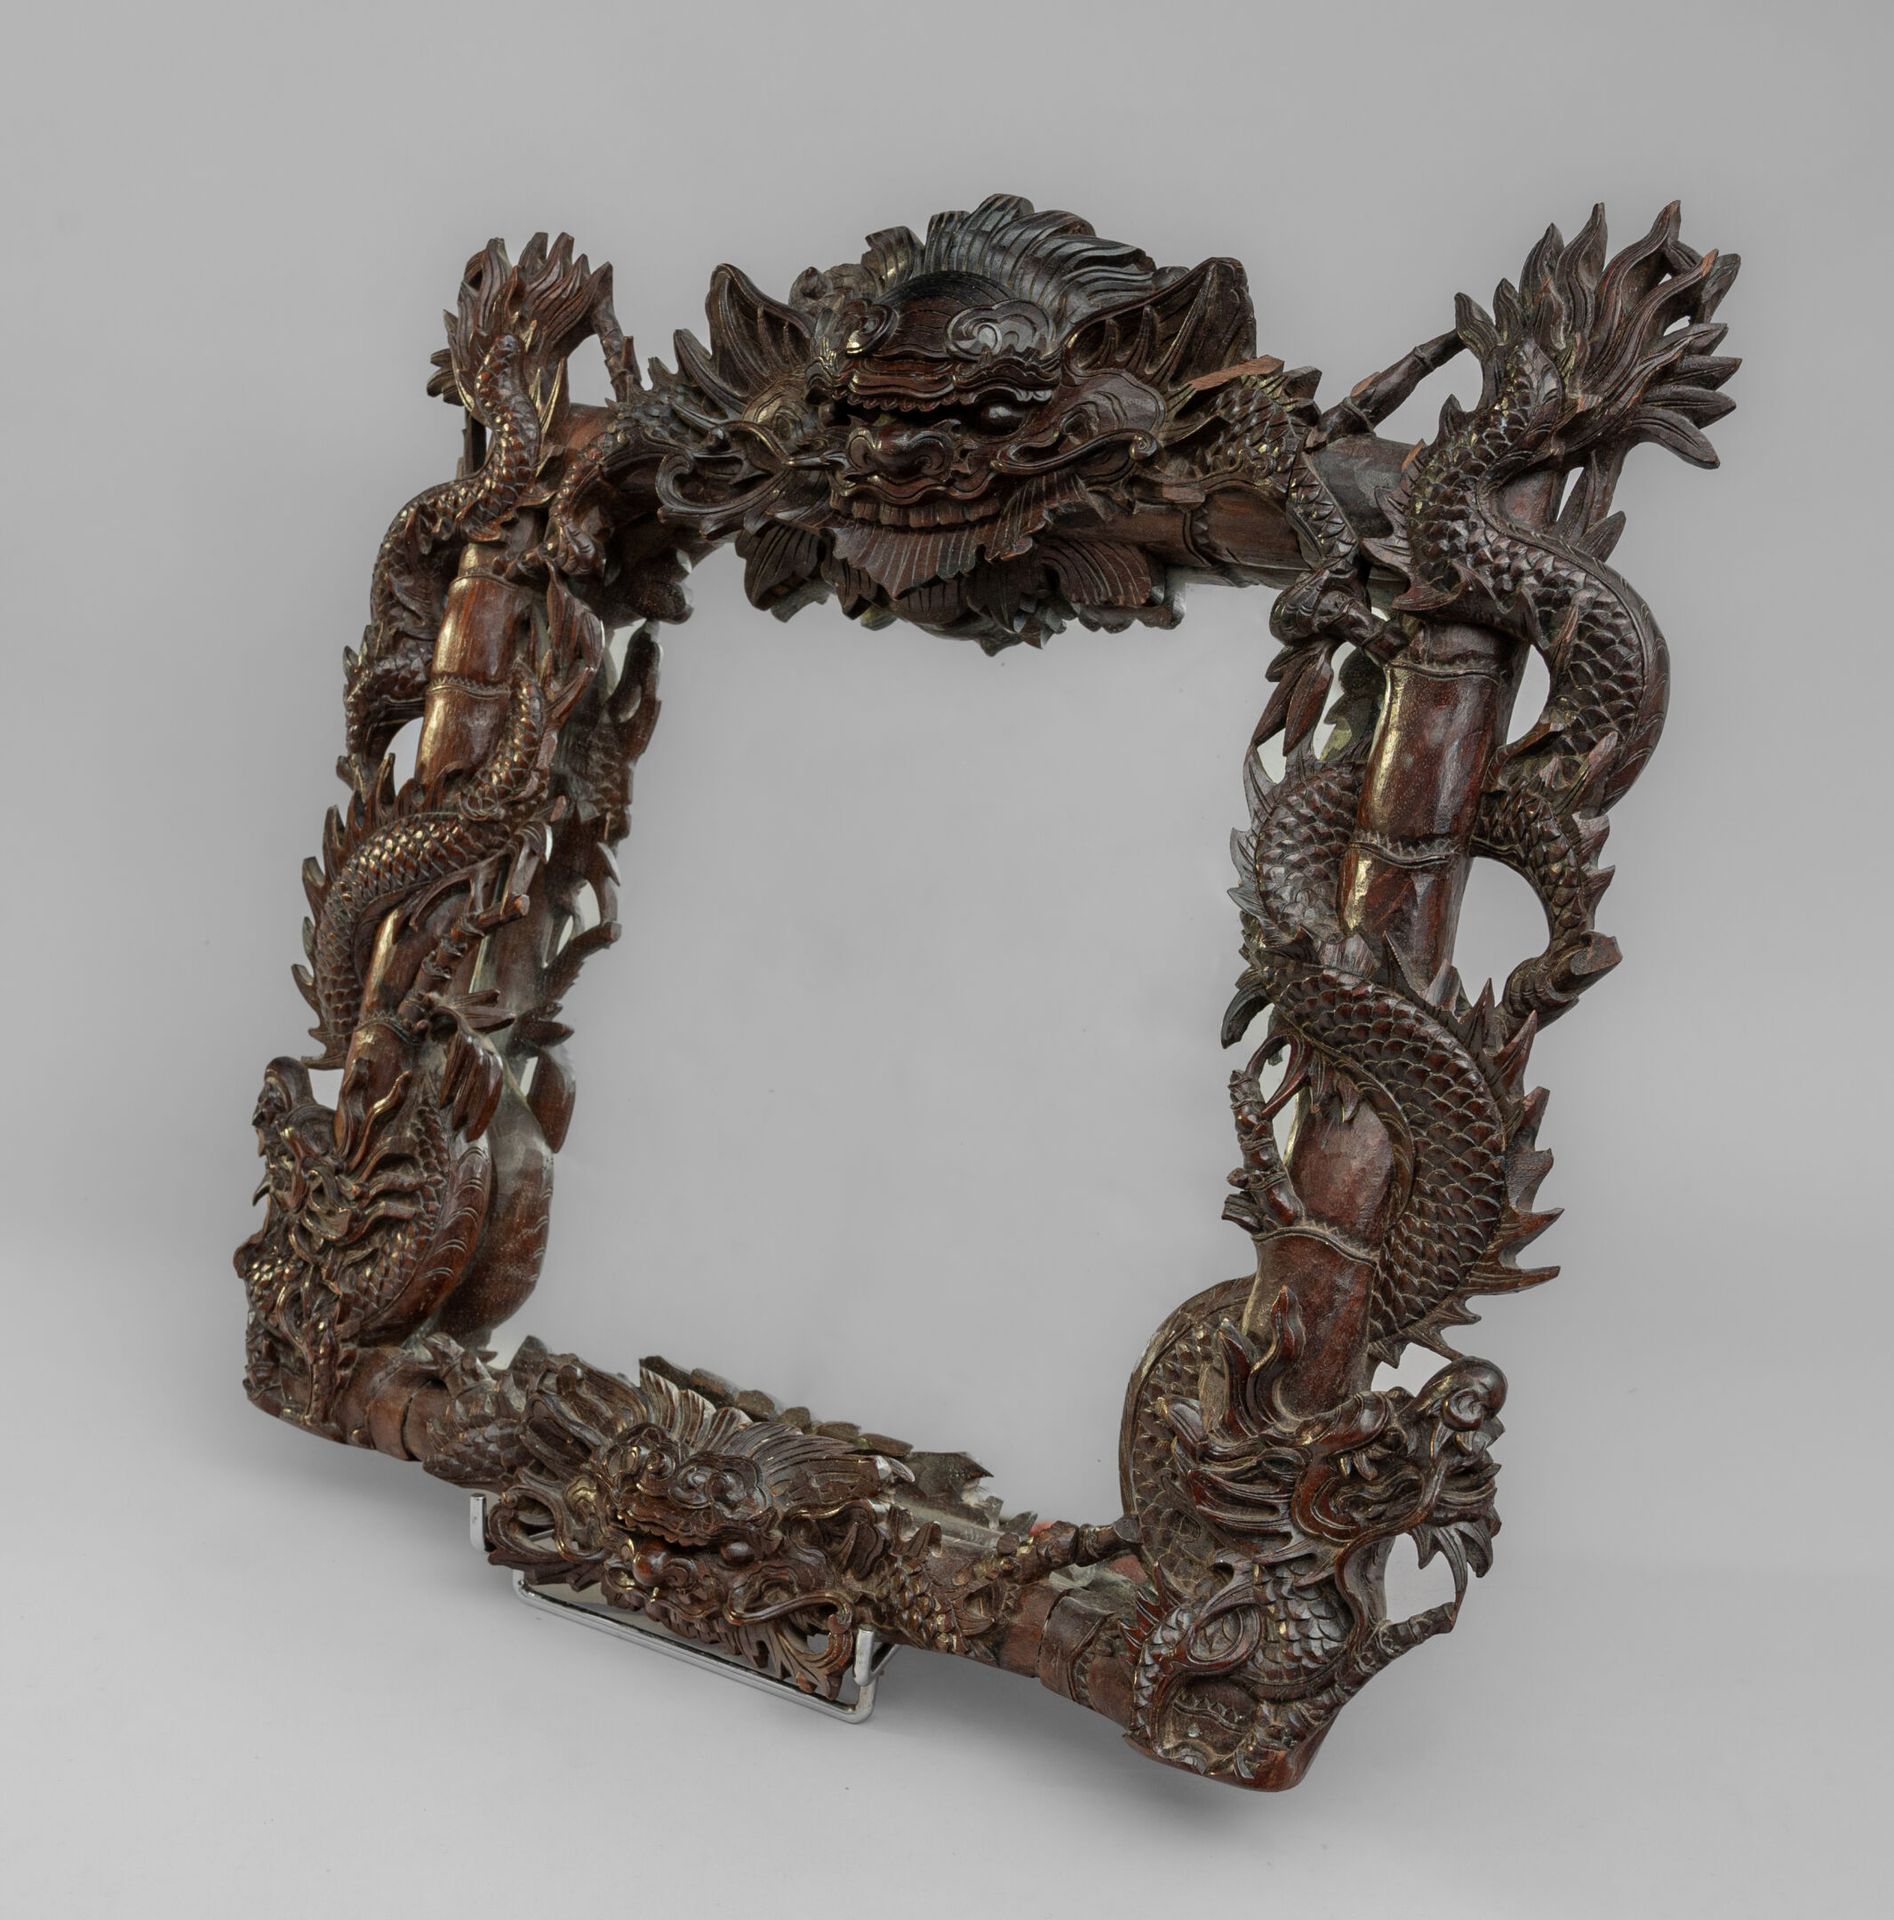 Null 带木框的镜子，印度支那/越南，19 世纪末/20 世纪初
镜框模仿一根大竹竿，竹竿两侧各有一条龙缠绕，上端点缀着一个大龙头，下端点缀着一个小龙头。有缺&hellip;